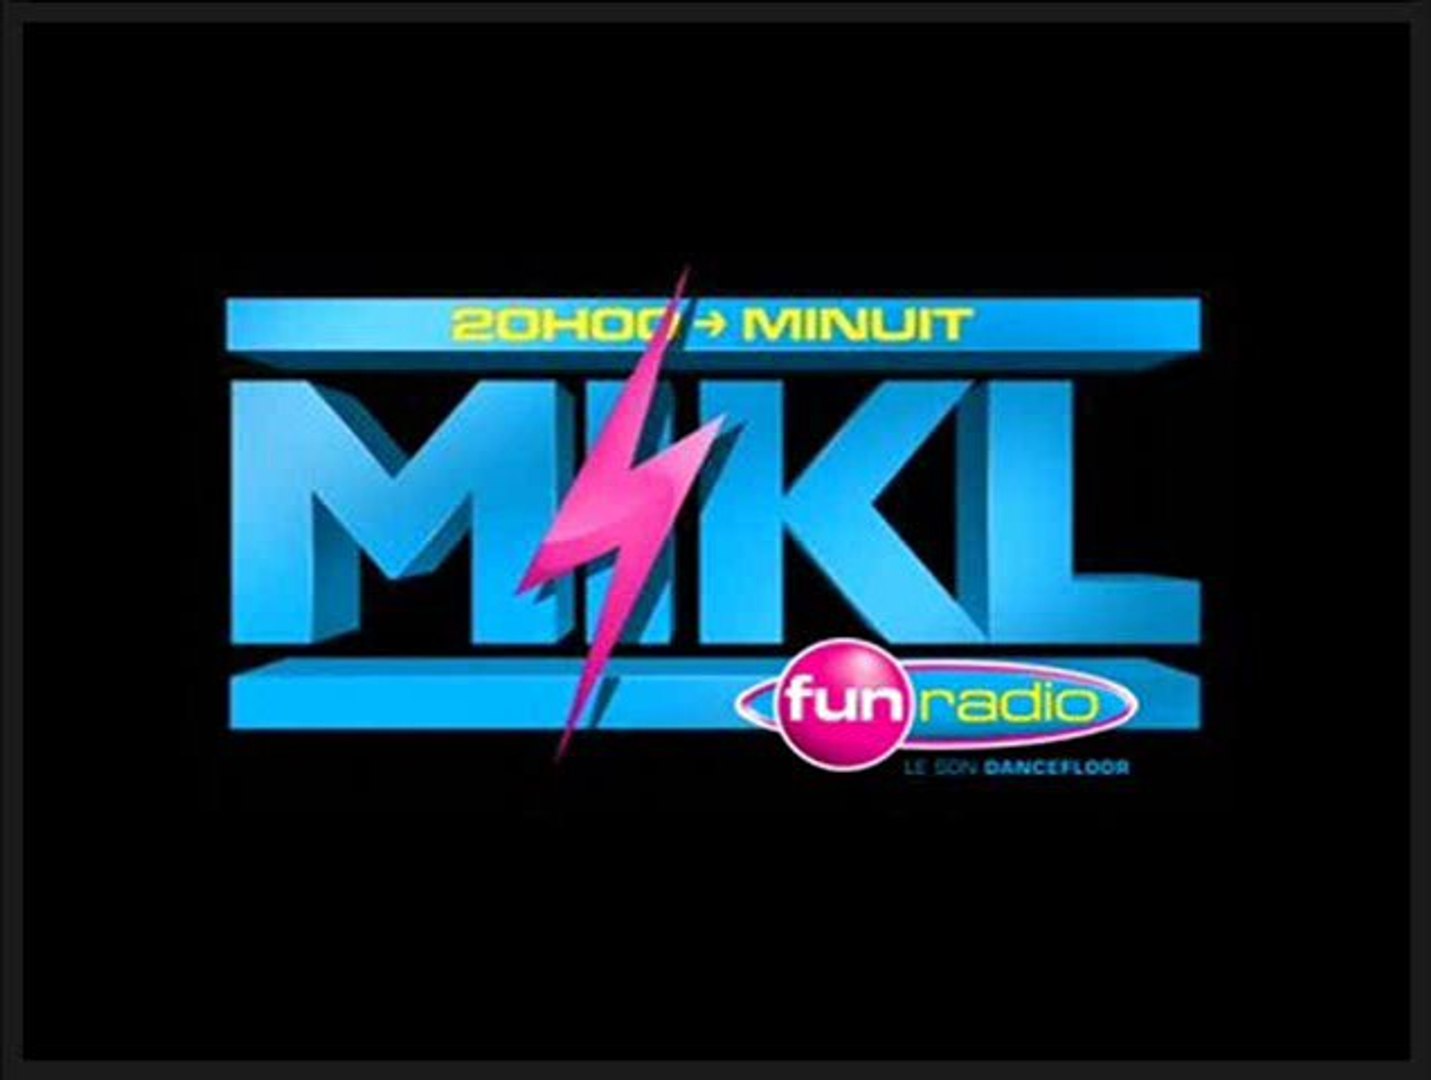 Podcast : La BM - Mikl Libre Antenne Fun Radio - Vidéo Dailymotion